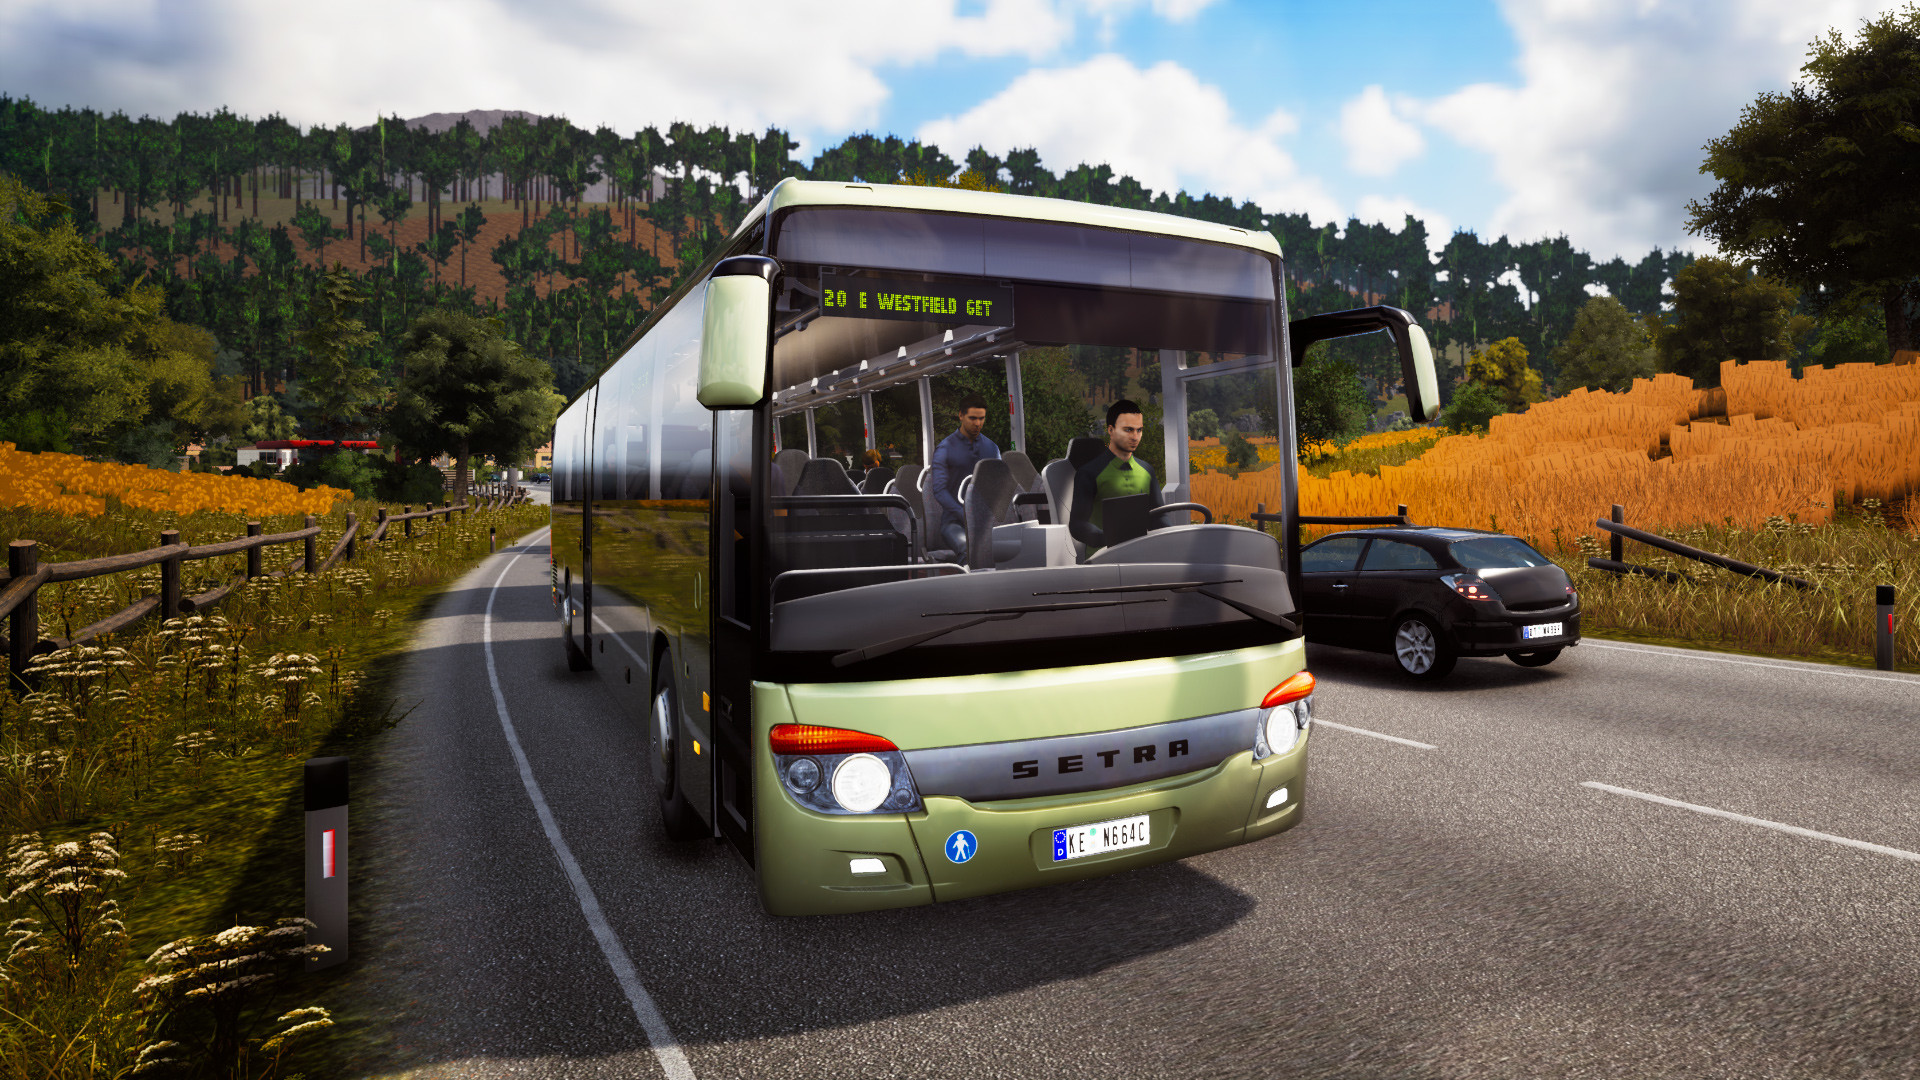 Bus Simulator 18 - Setra Bus Pack 1 Featured Screenshot #1